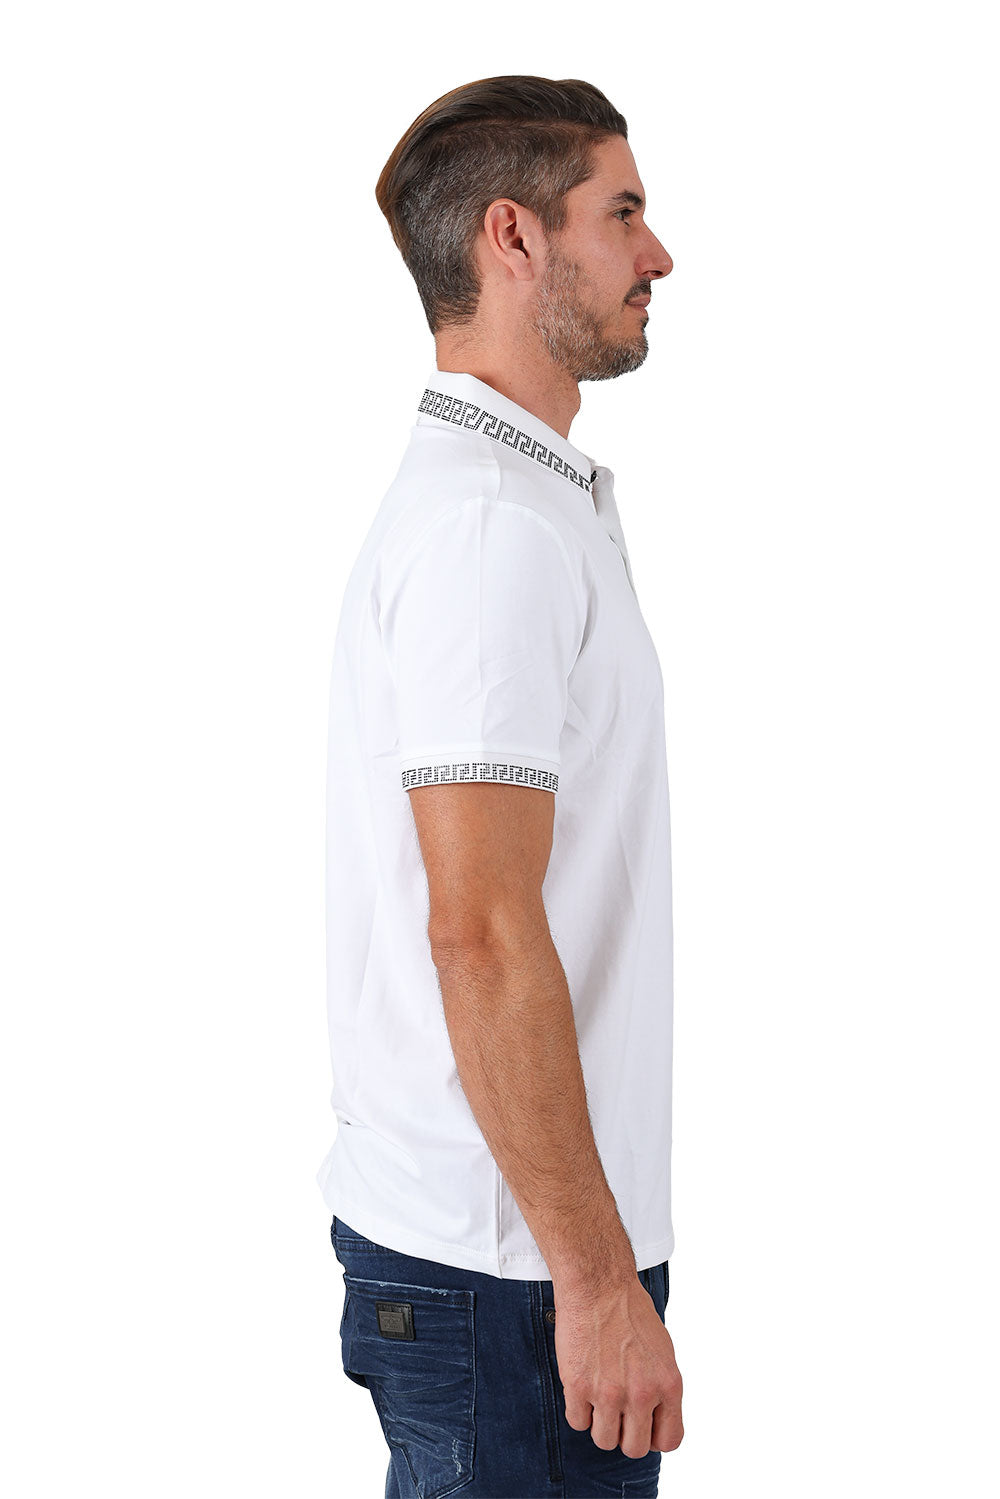 BARABAS men's rhinestone Greek key pattern polo shirt PS118 White Black